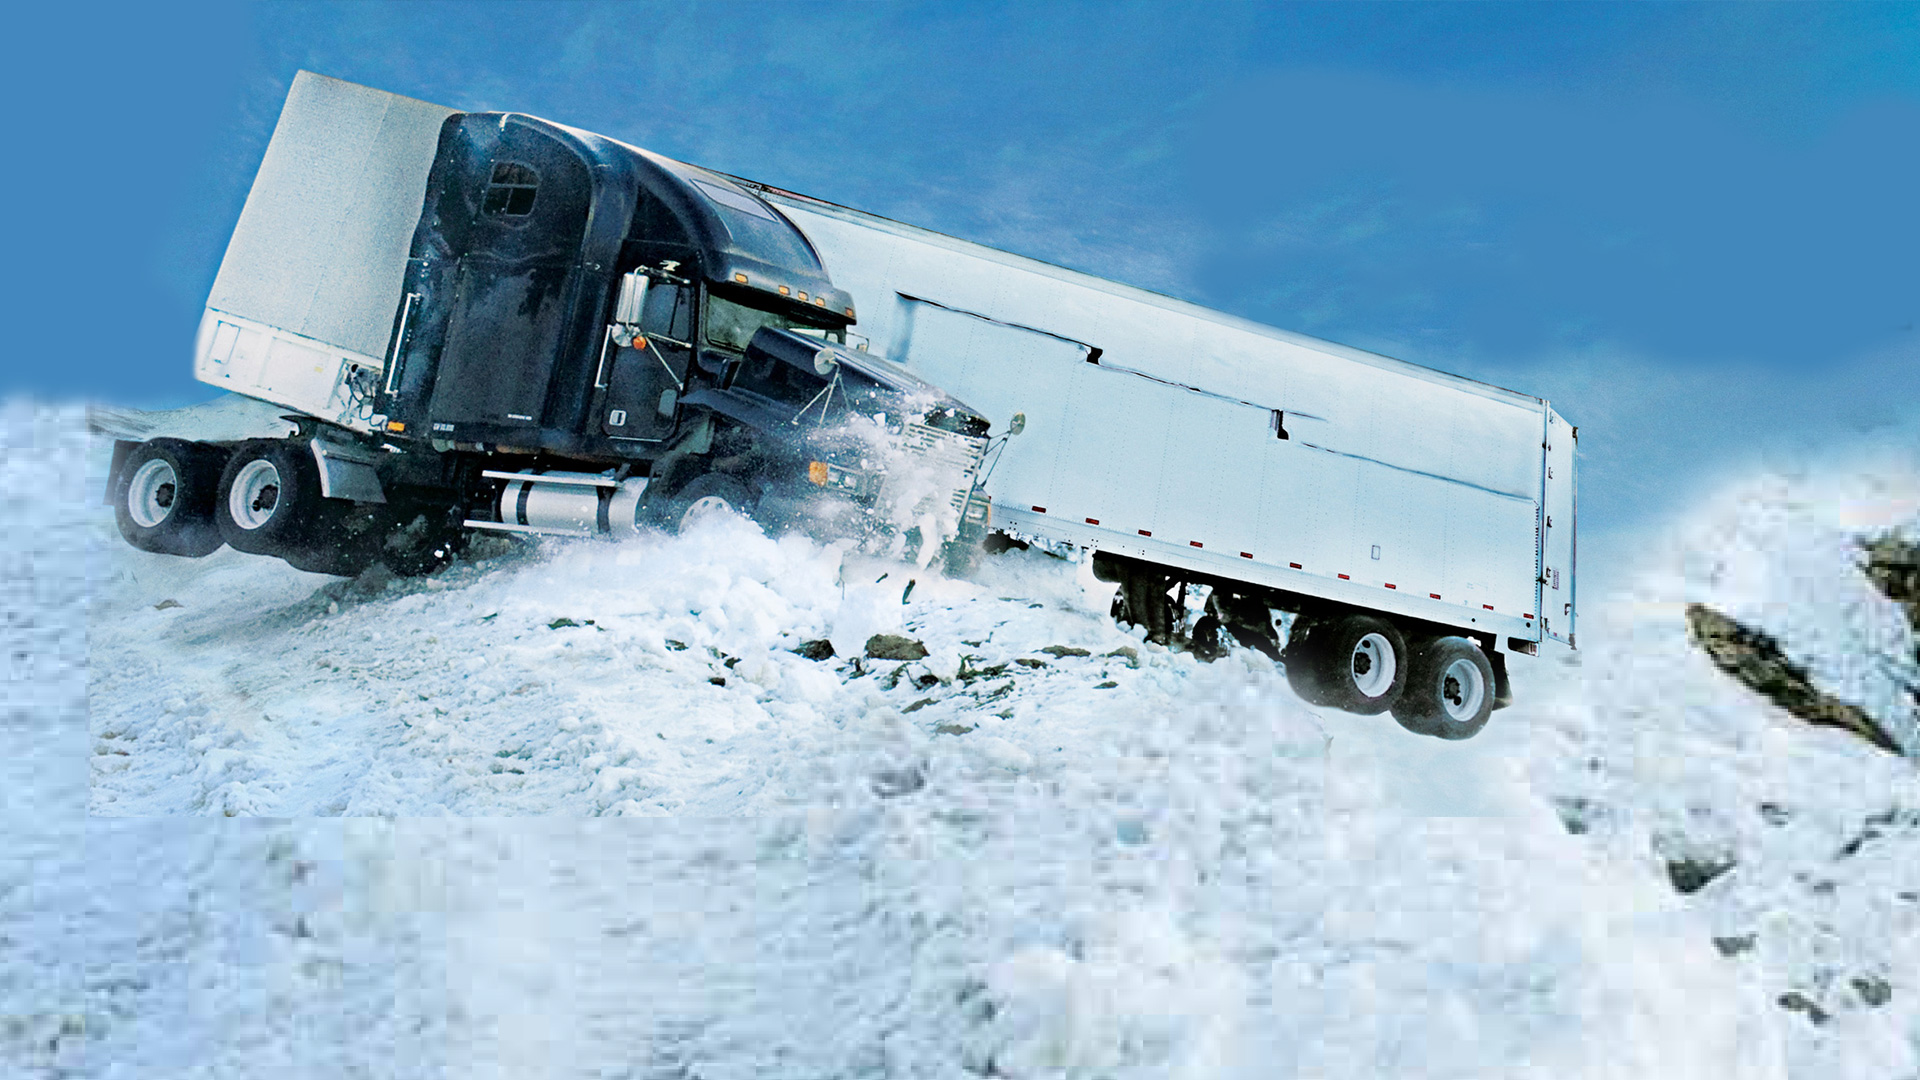 https://cropper.watch.aetnd.com/cdn.watch.aetnd.com/sites/2/2015/10/watch-desktop-hero-ice-road-truckers-s3.jpg